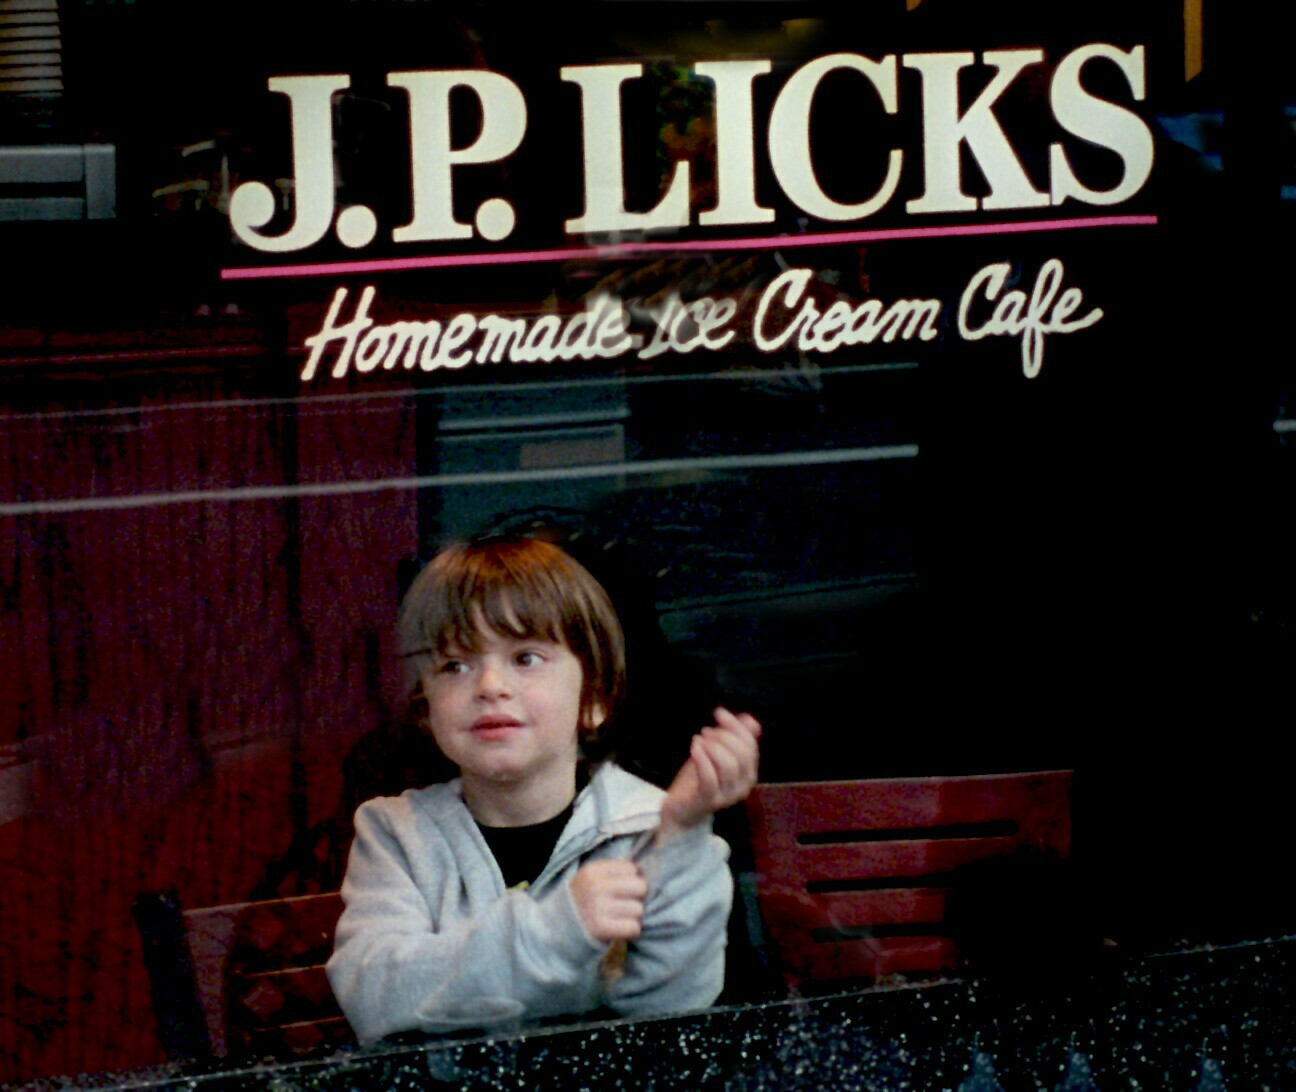 J.P Licks Kid.jpg